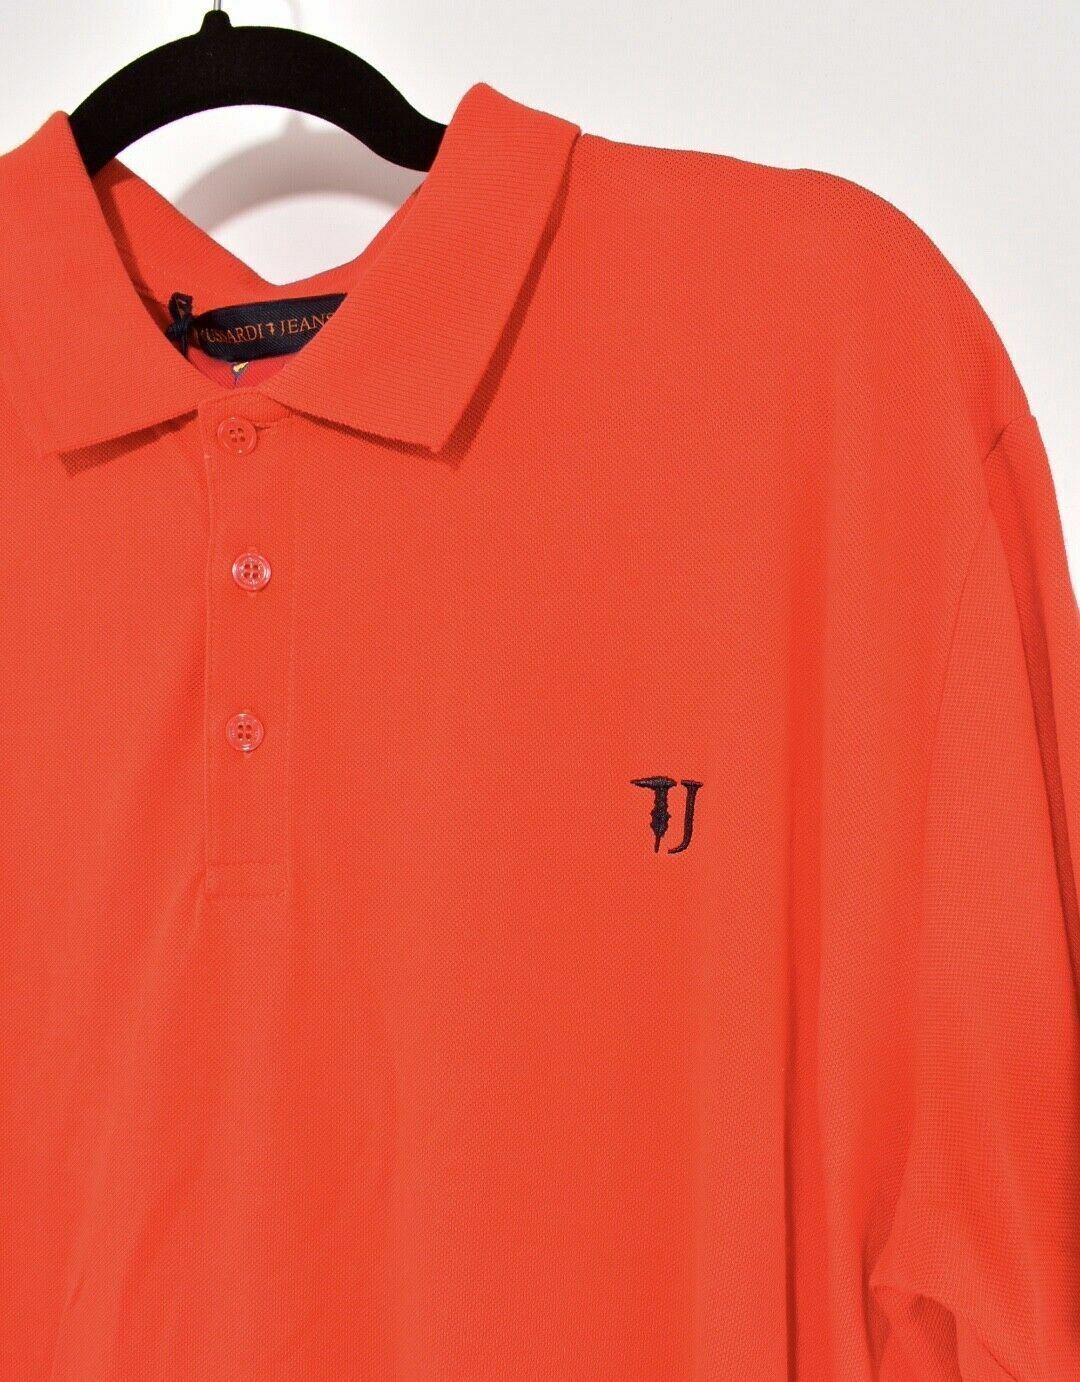 TRUSSARDI JEANS Men's Short Sleeve Red Polo Shirt, size XL